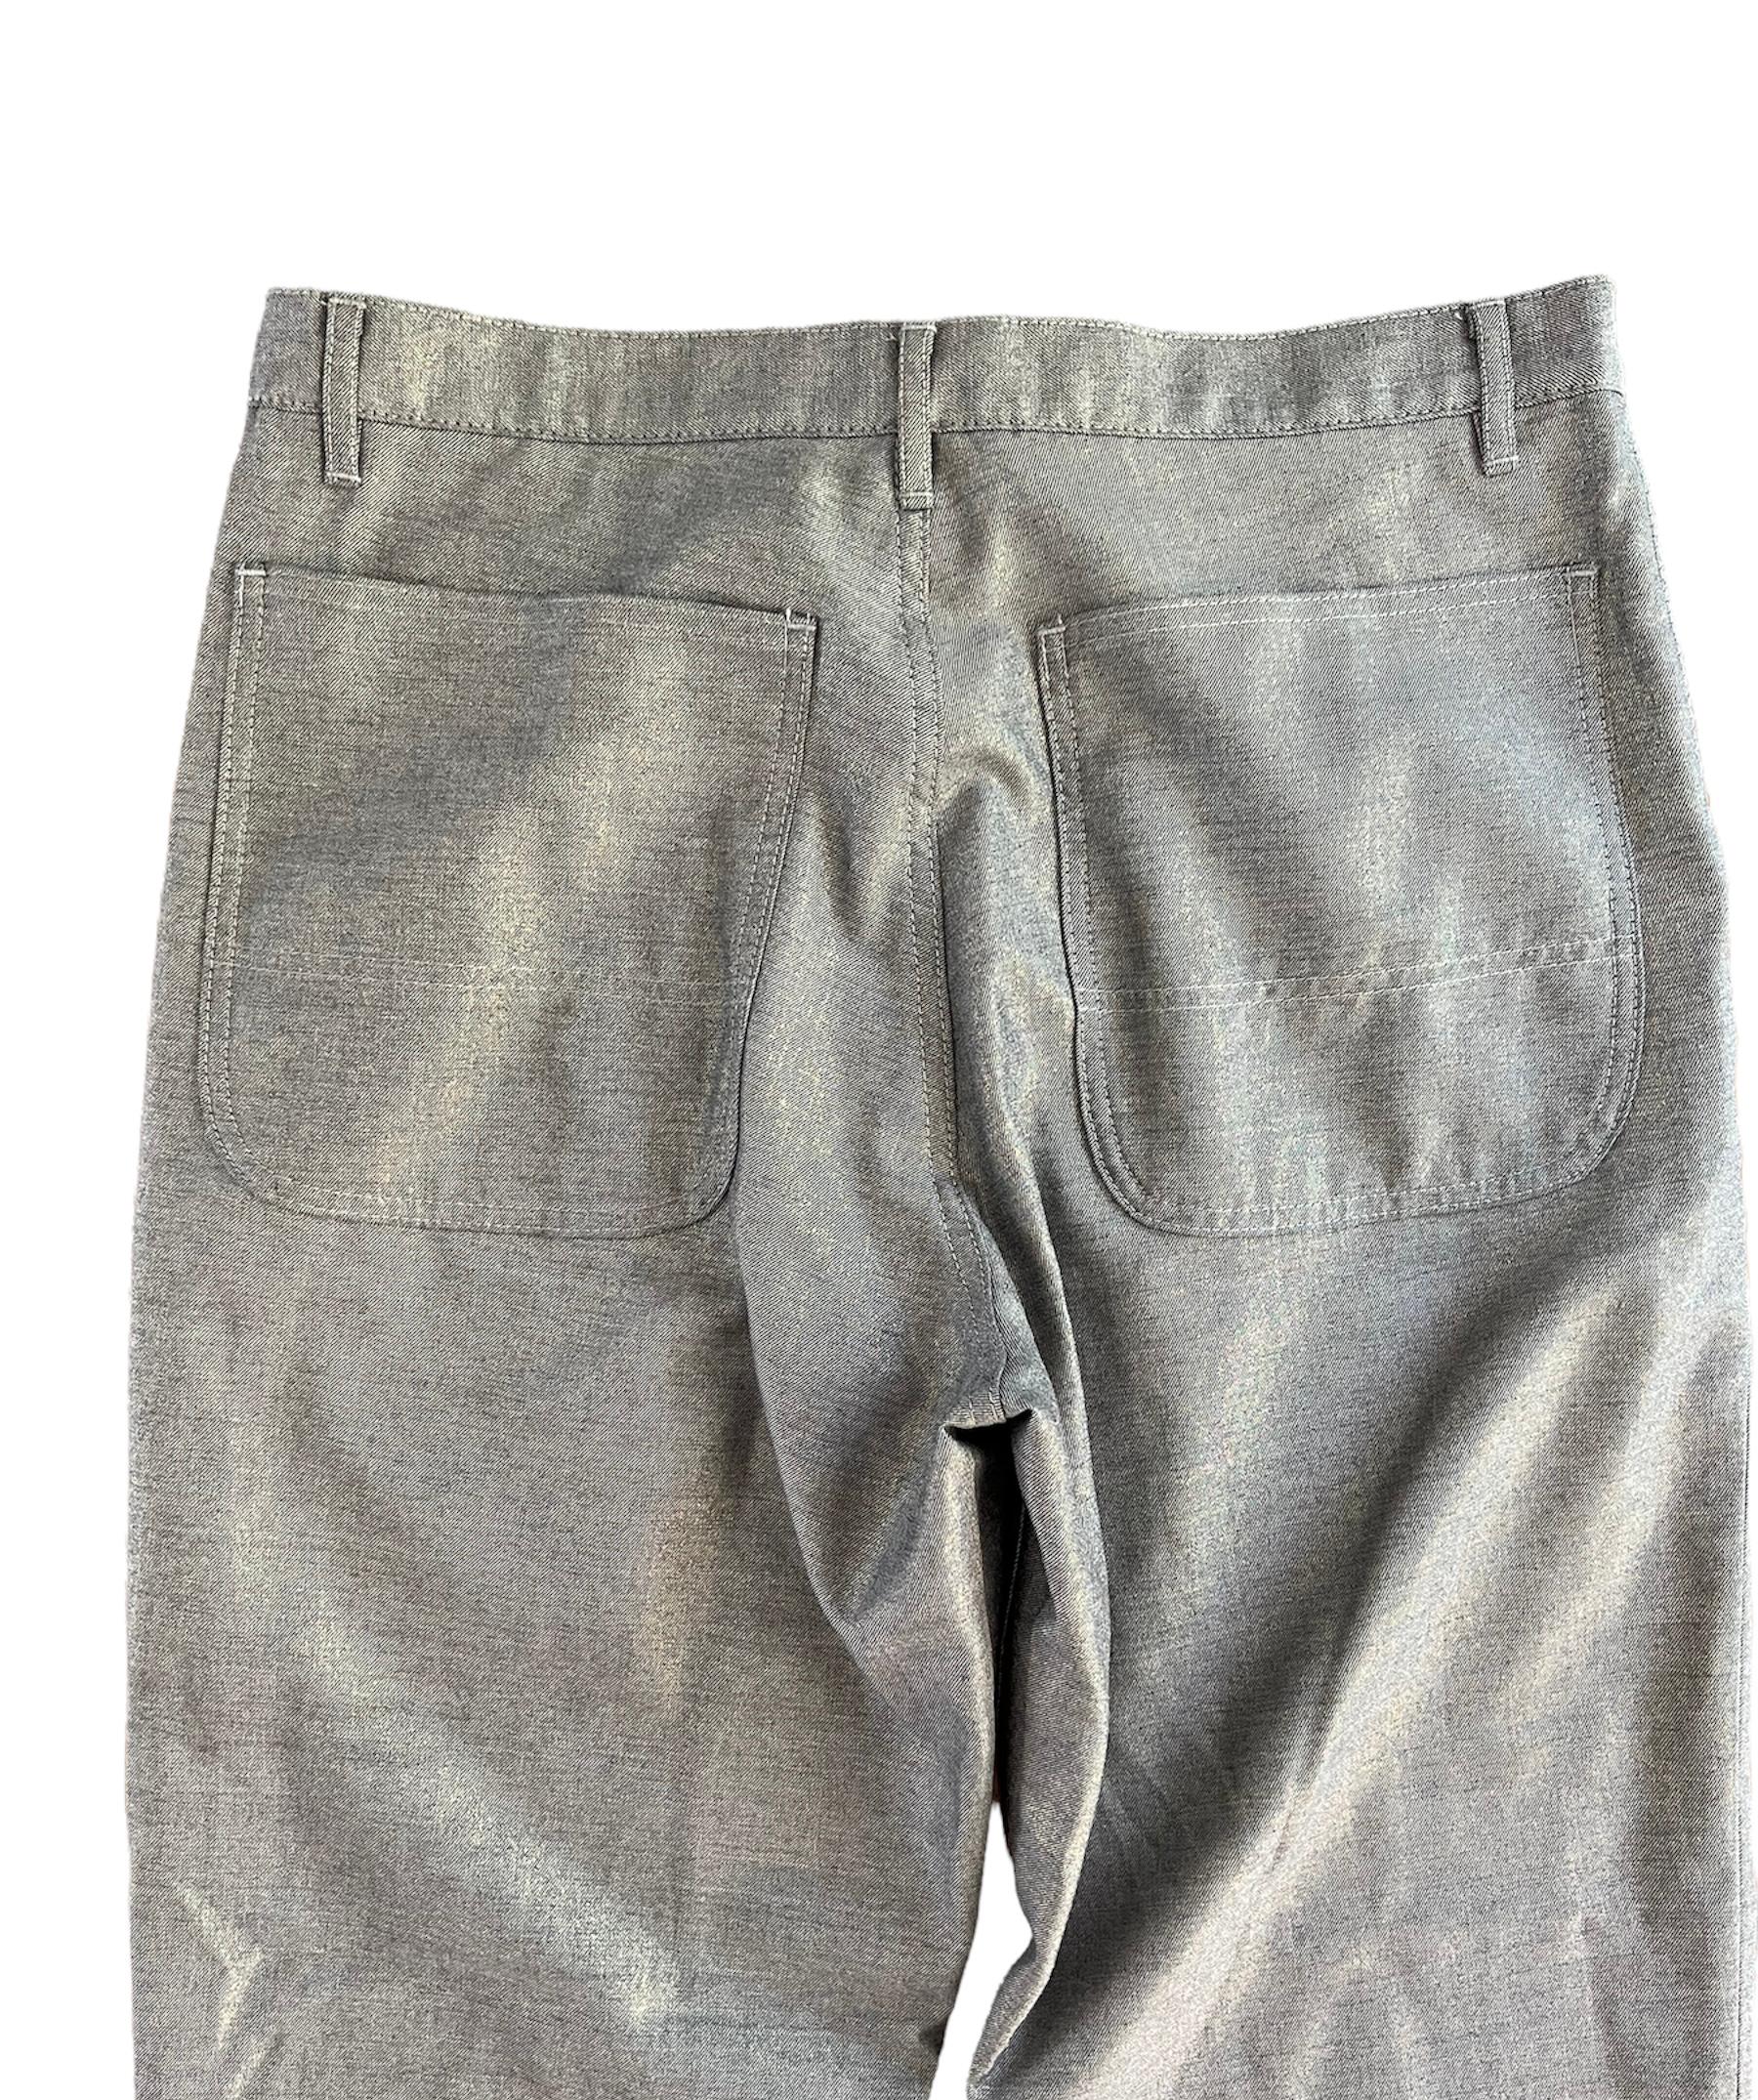 medium pants measurements